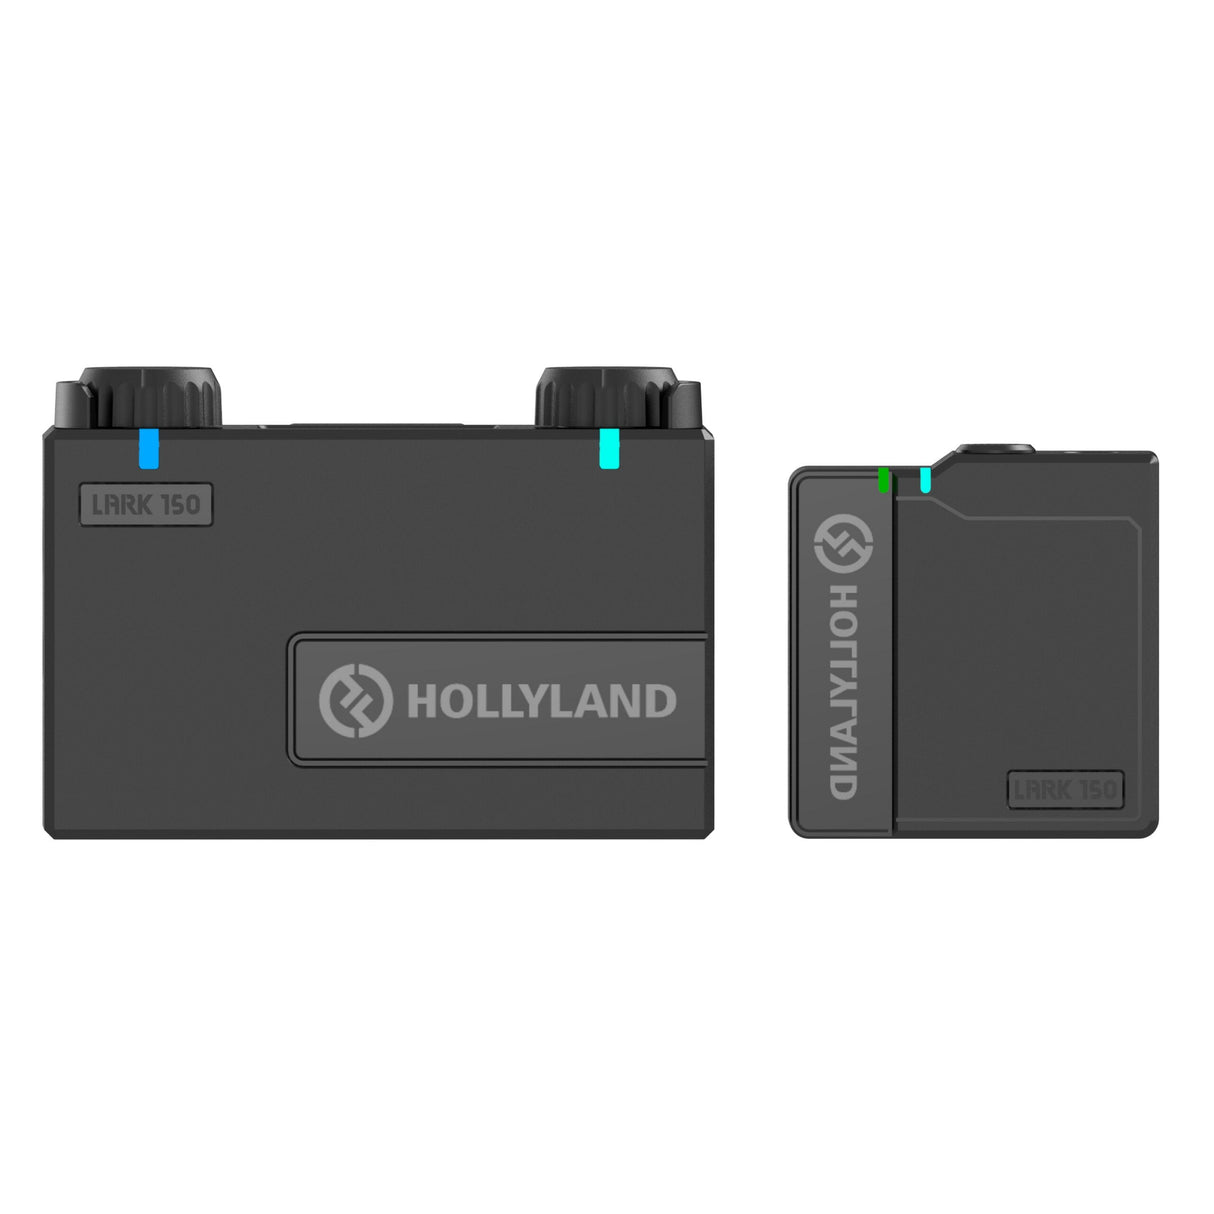 Hollyland LARK 150 1-Person Wireless Microphone System, Black